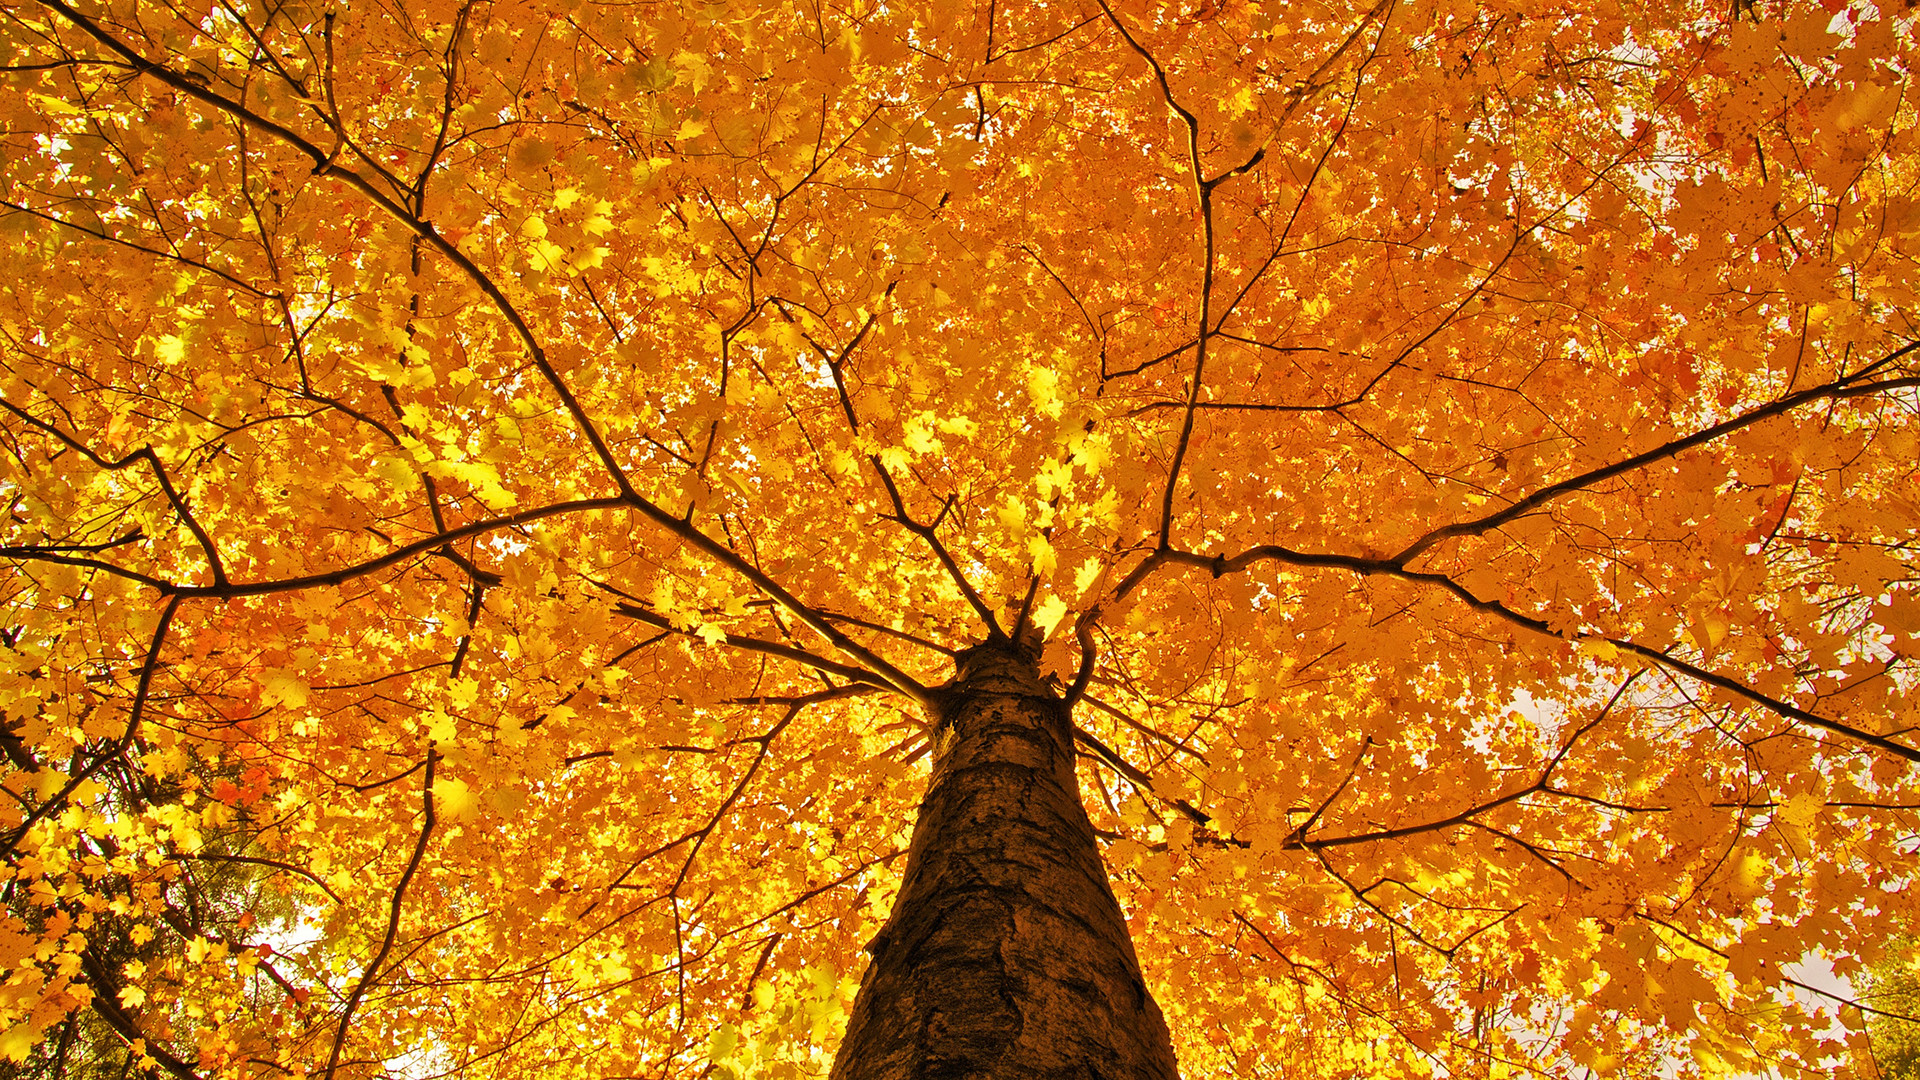 1920x1080 Fall Foliage Photo Free Download.